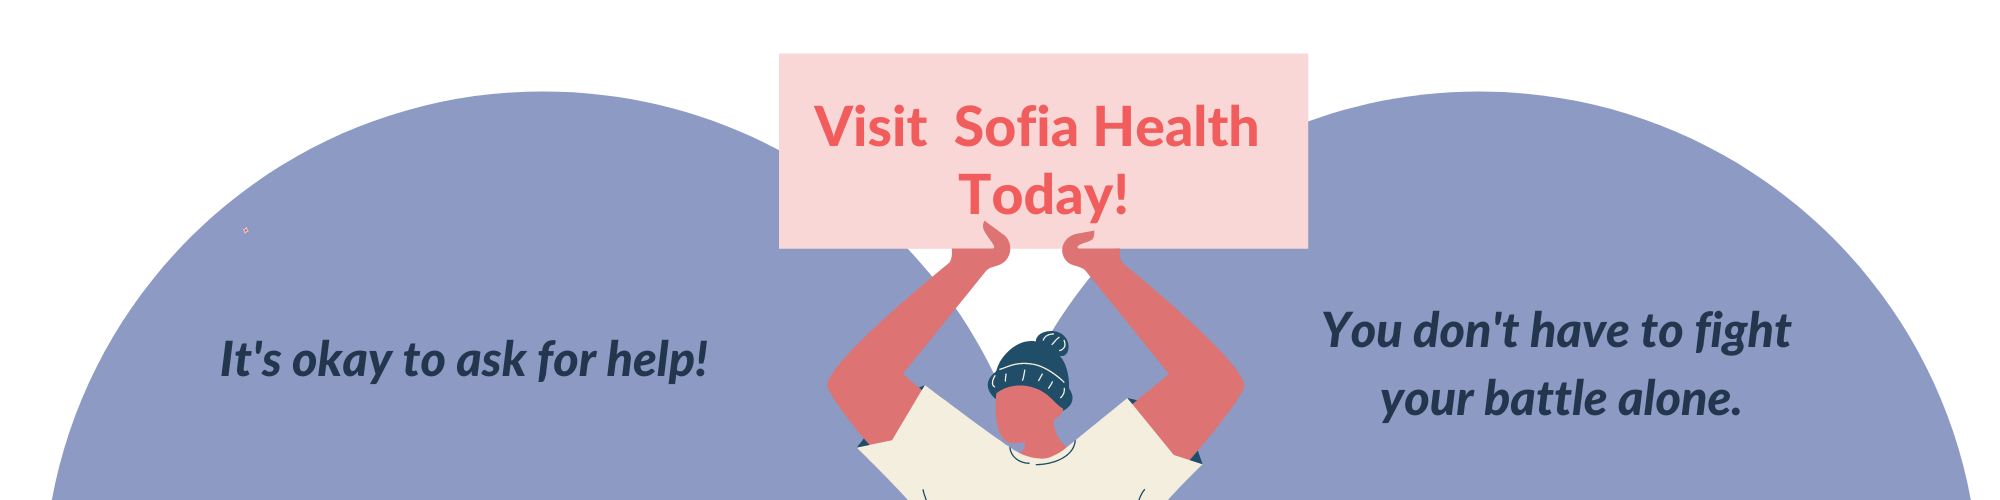 Visit Sofia Health